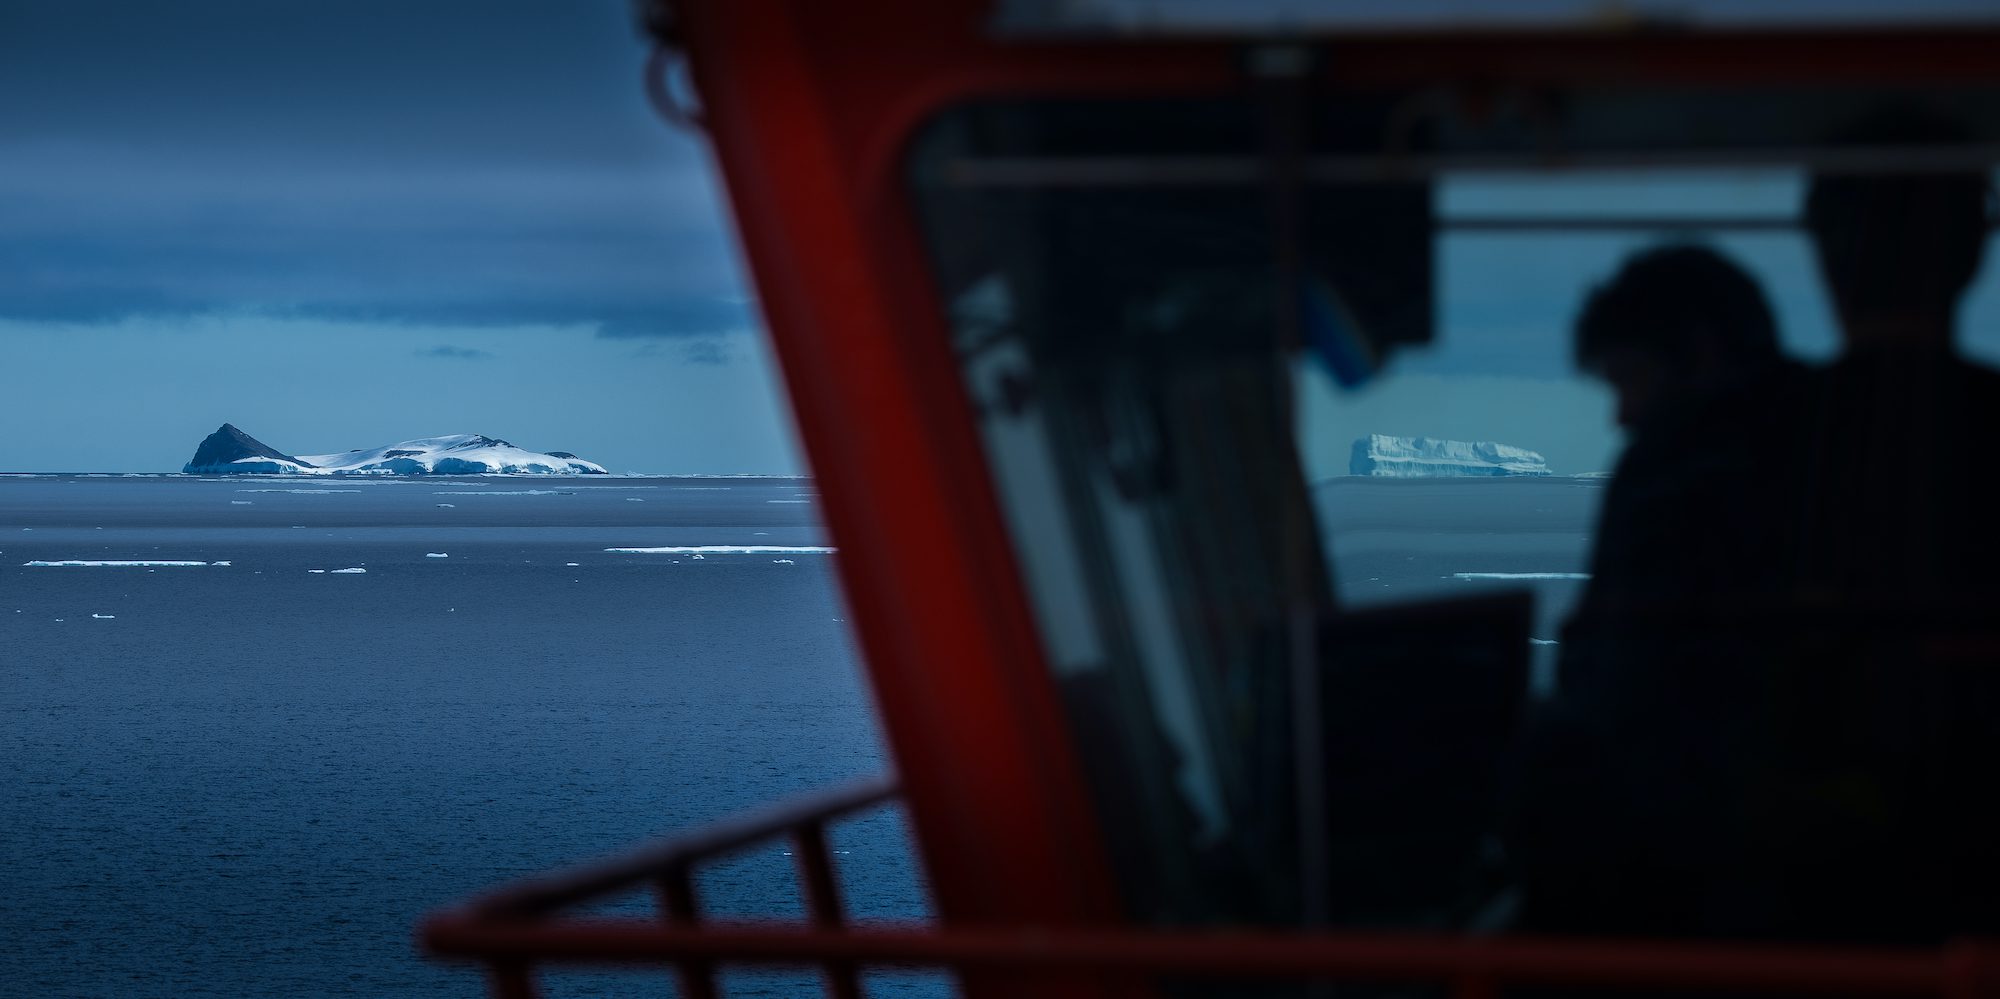 Ships bridge silhouetted with Antarctic Icebergs on the Horizon